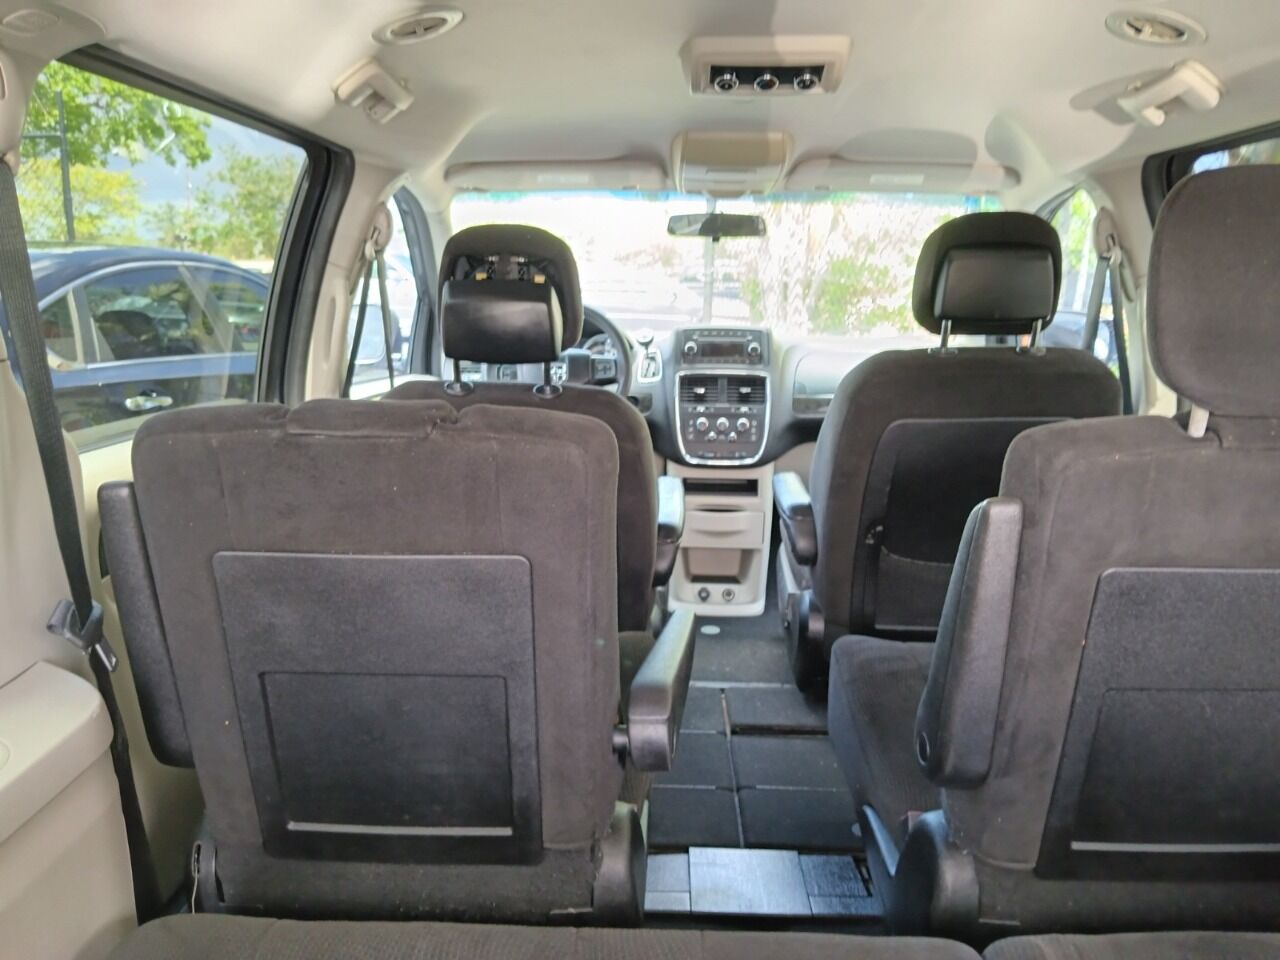 2013 Dodge Grand Caravan Minivan - $3,950